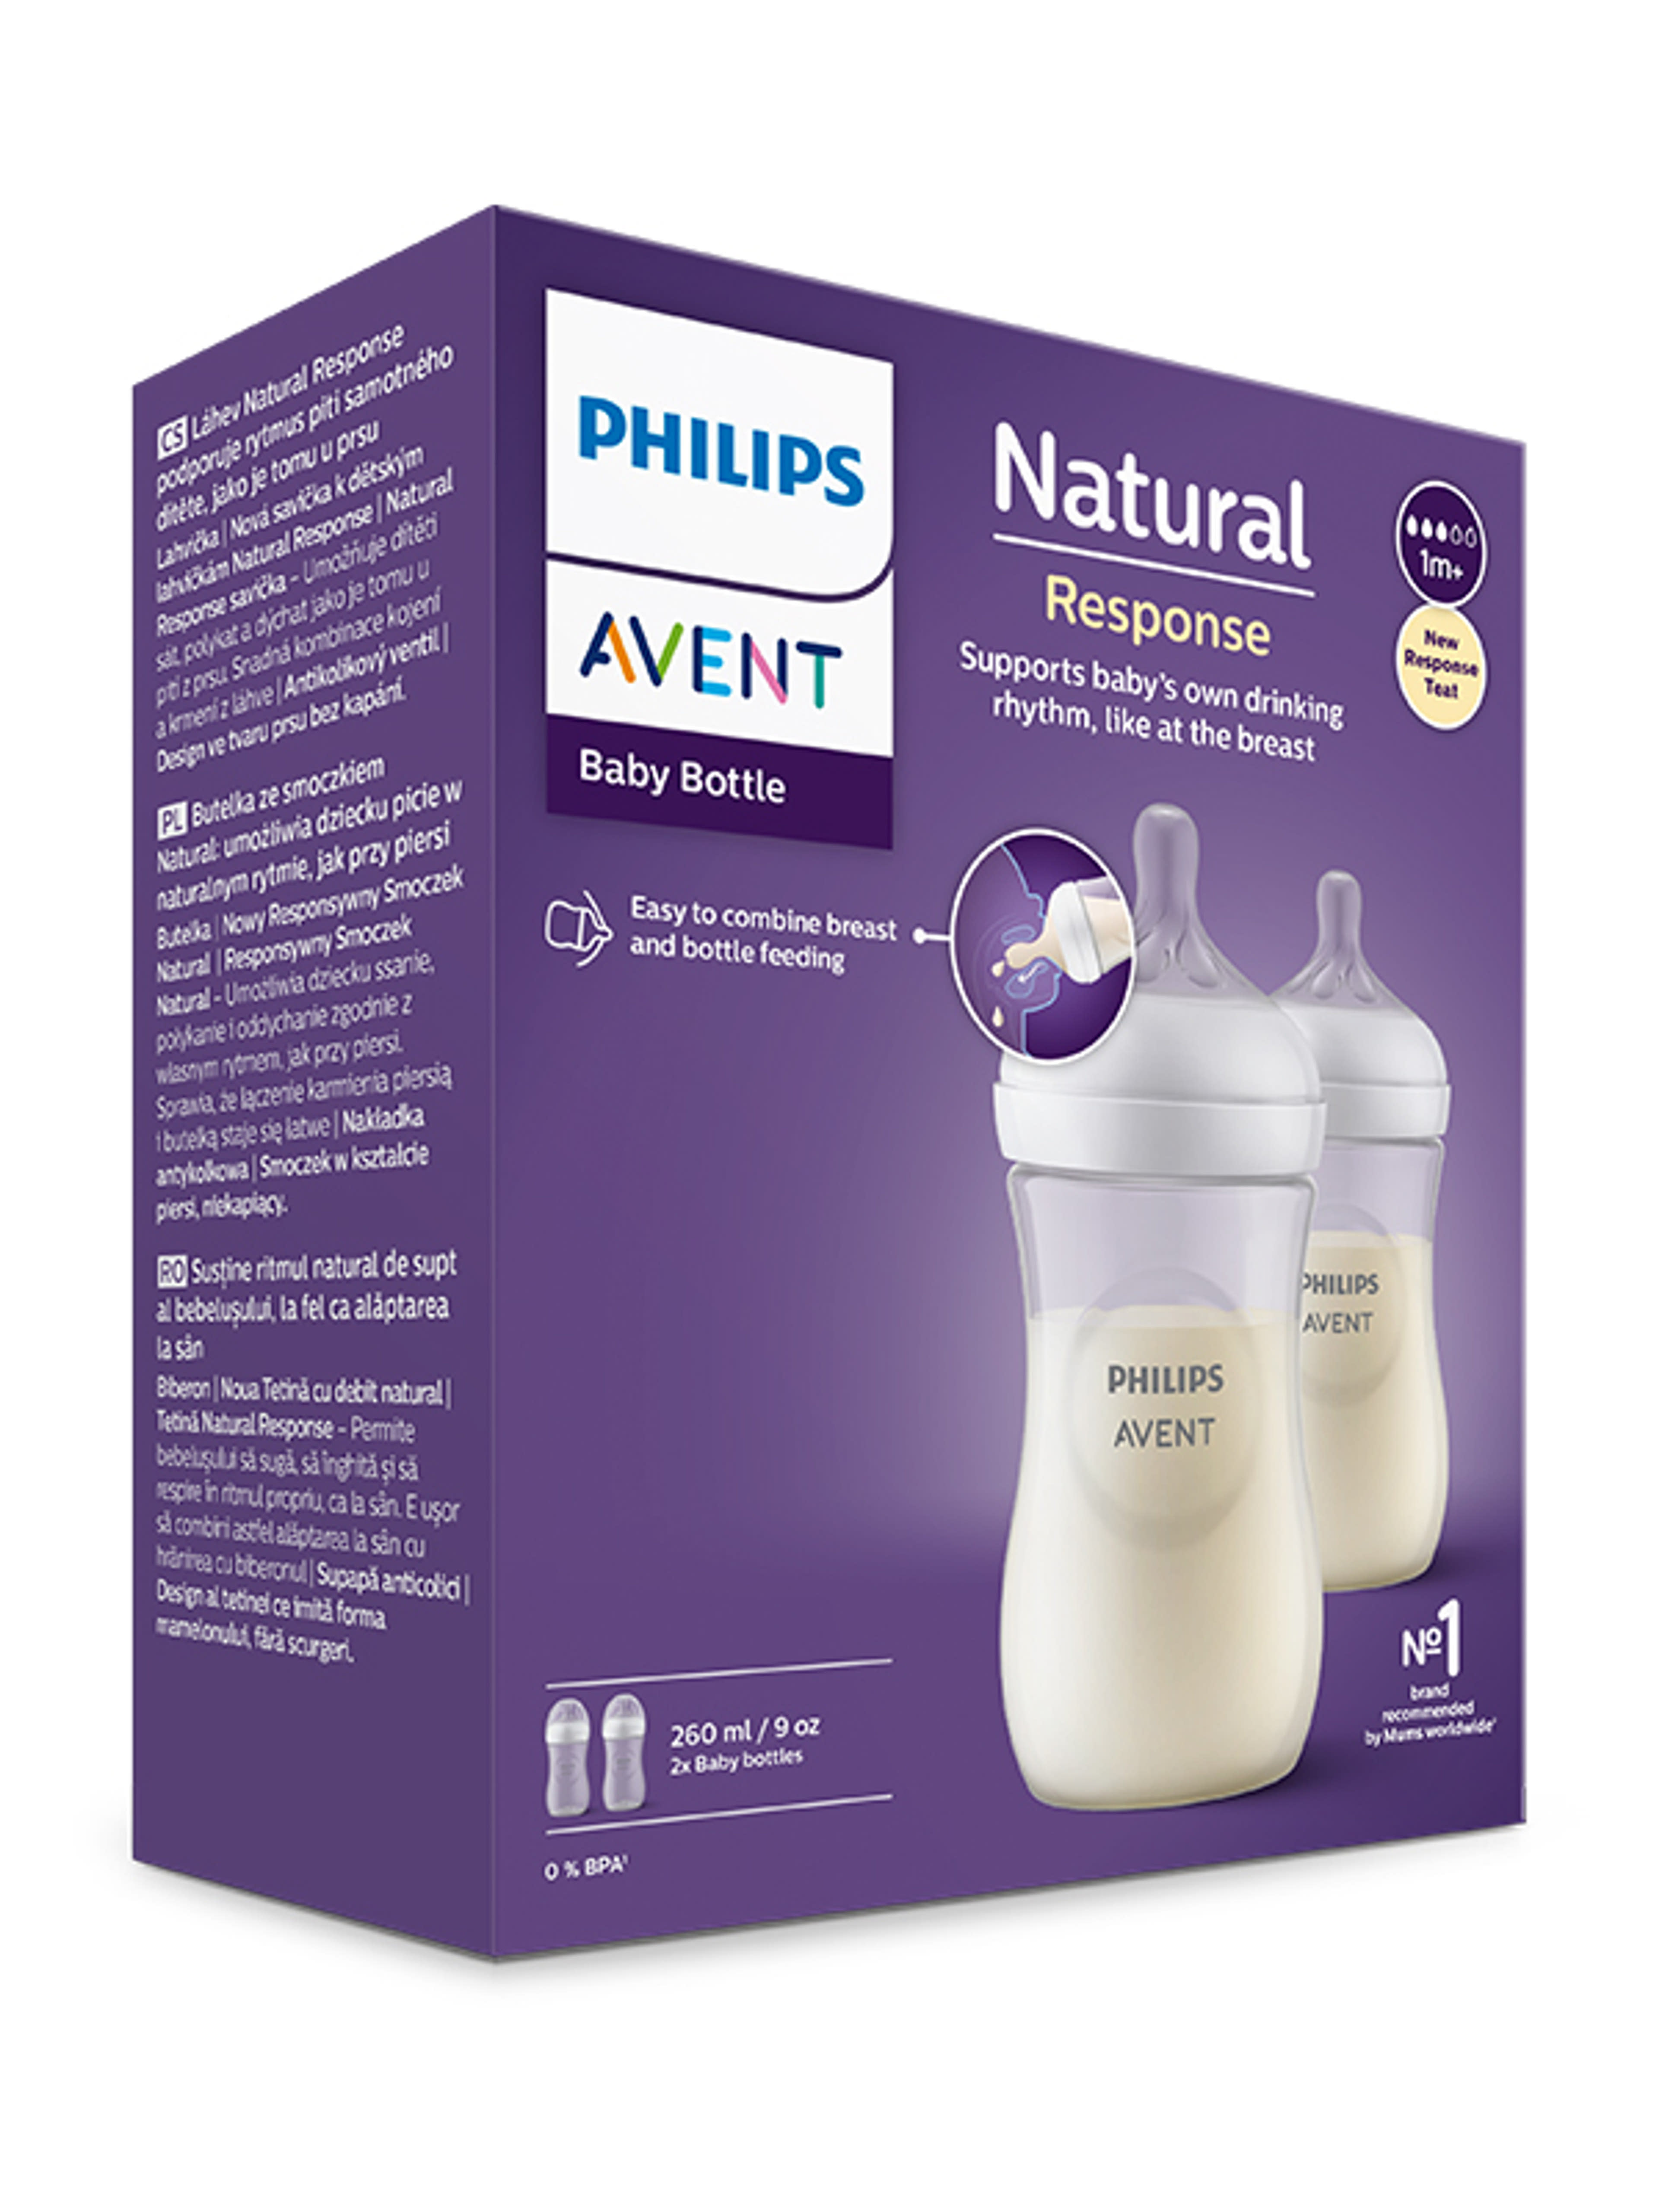 Philips Avent Natural Response cumisüveg 1 hónapos kortól 260 ml - 2 db-3